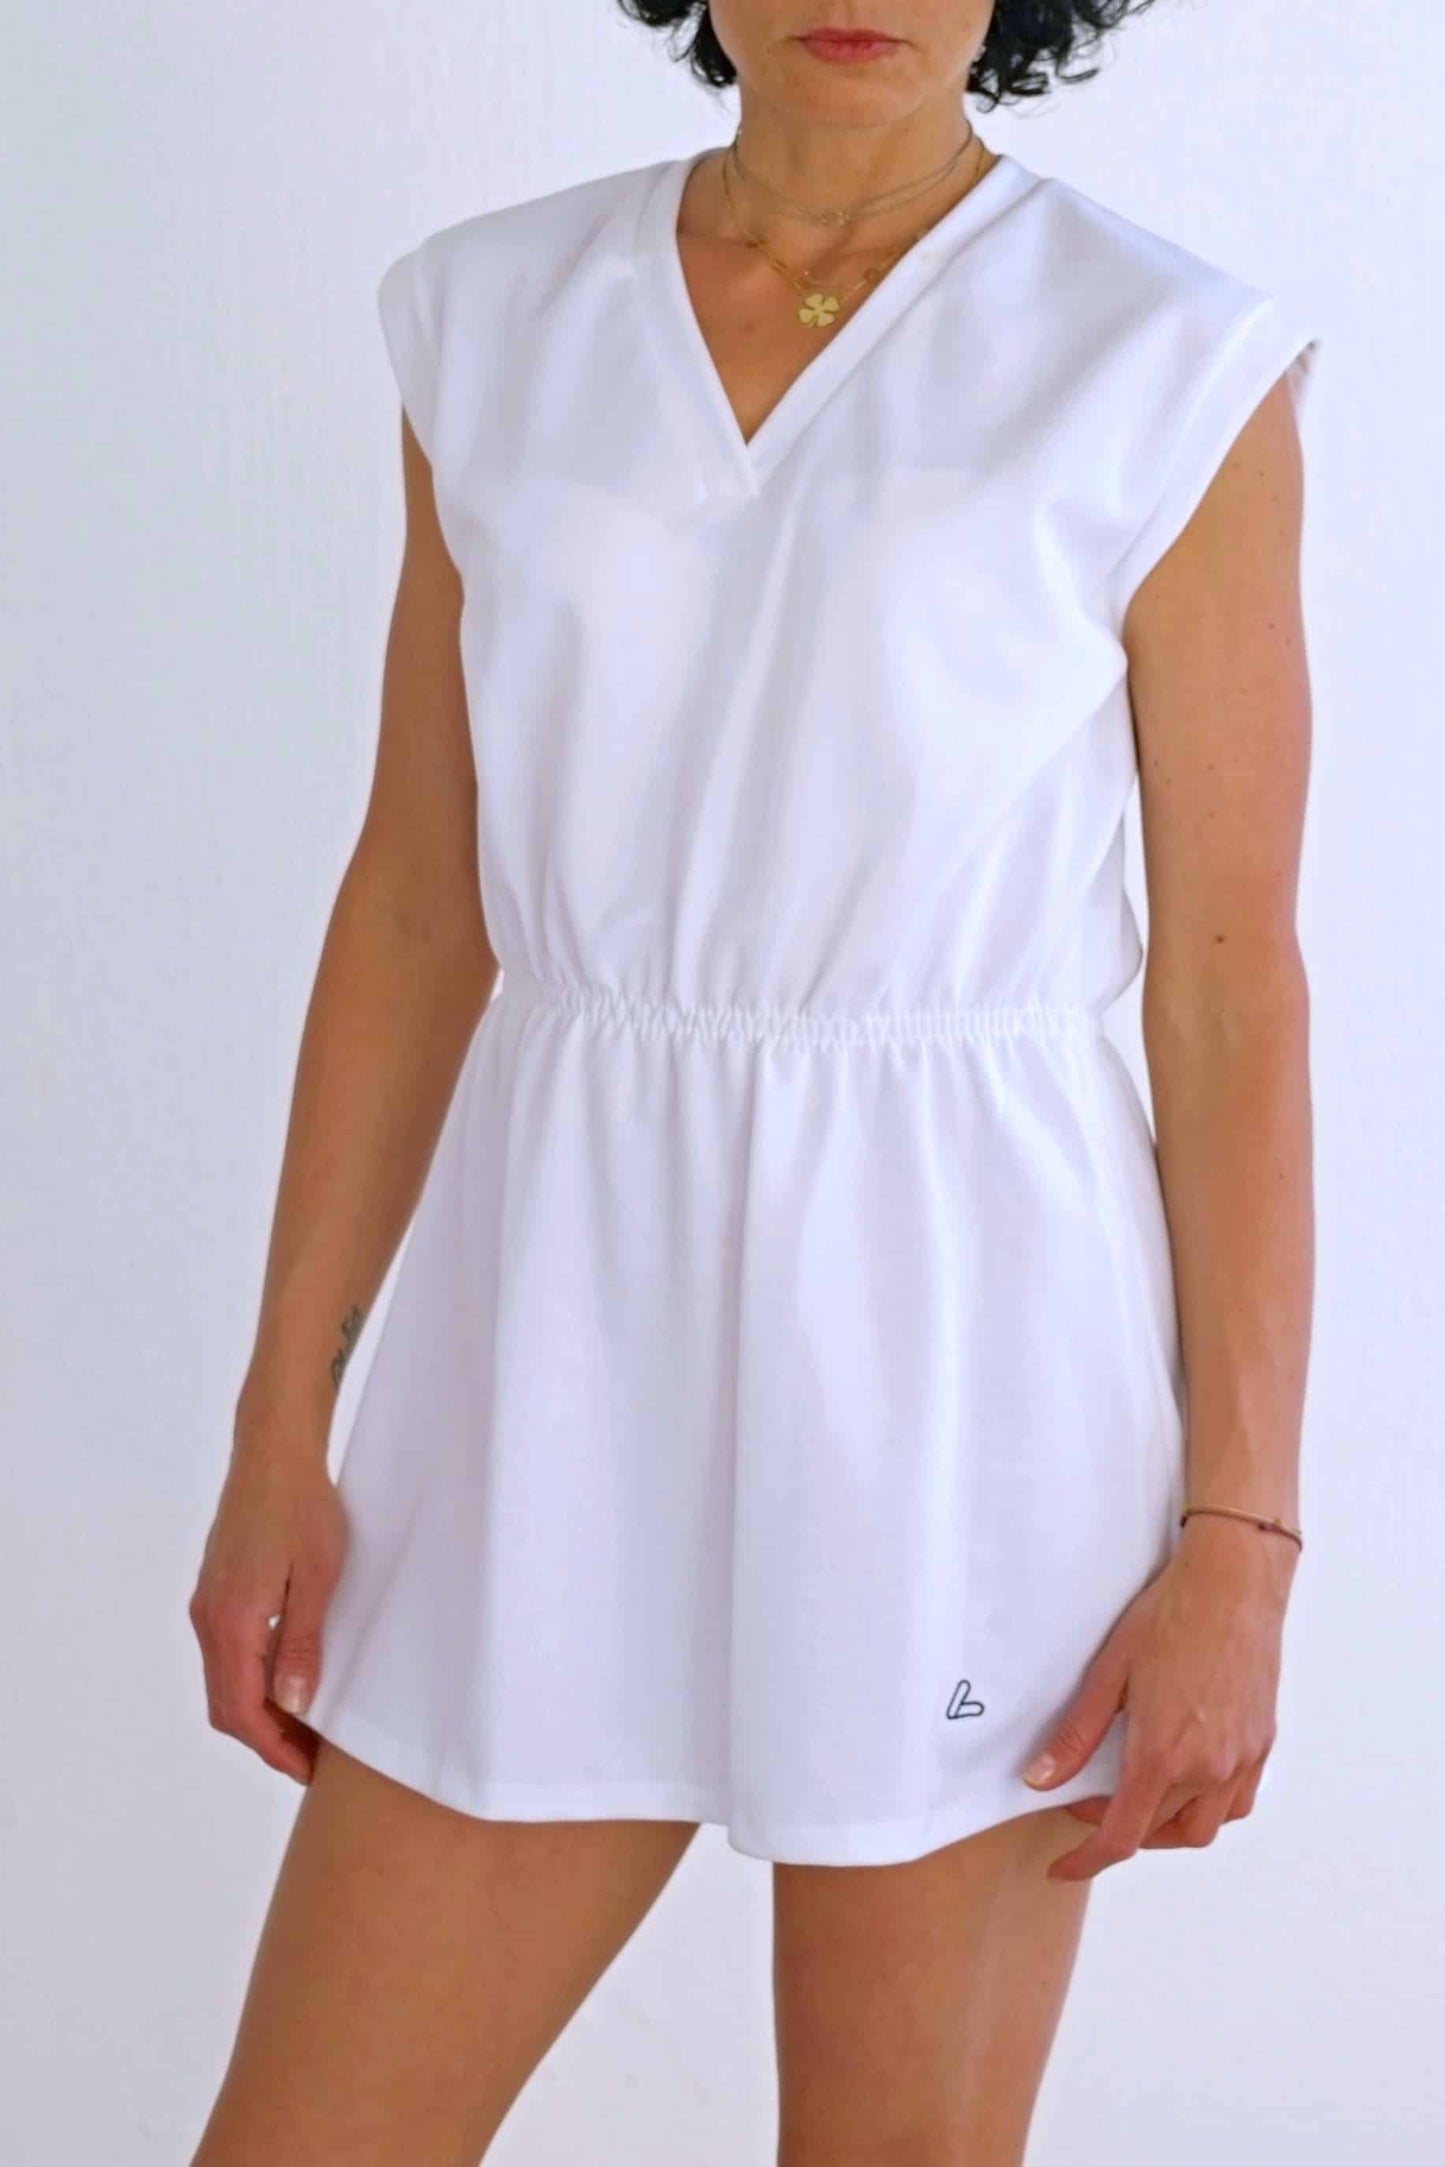 Retro Solid White 80's Tennis Dress